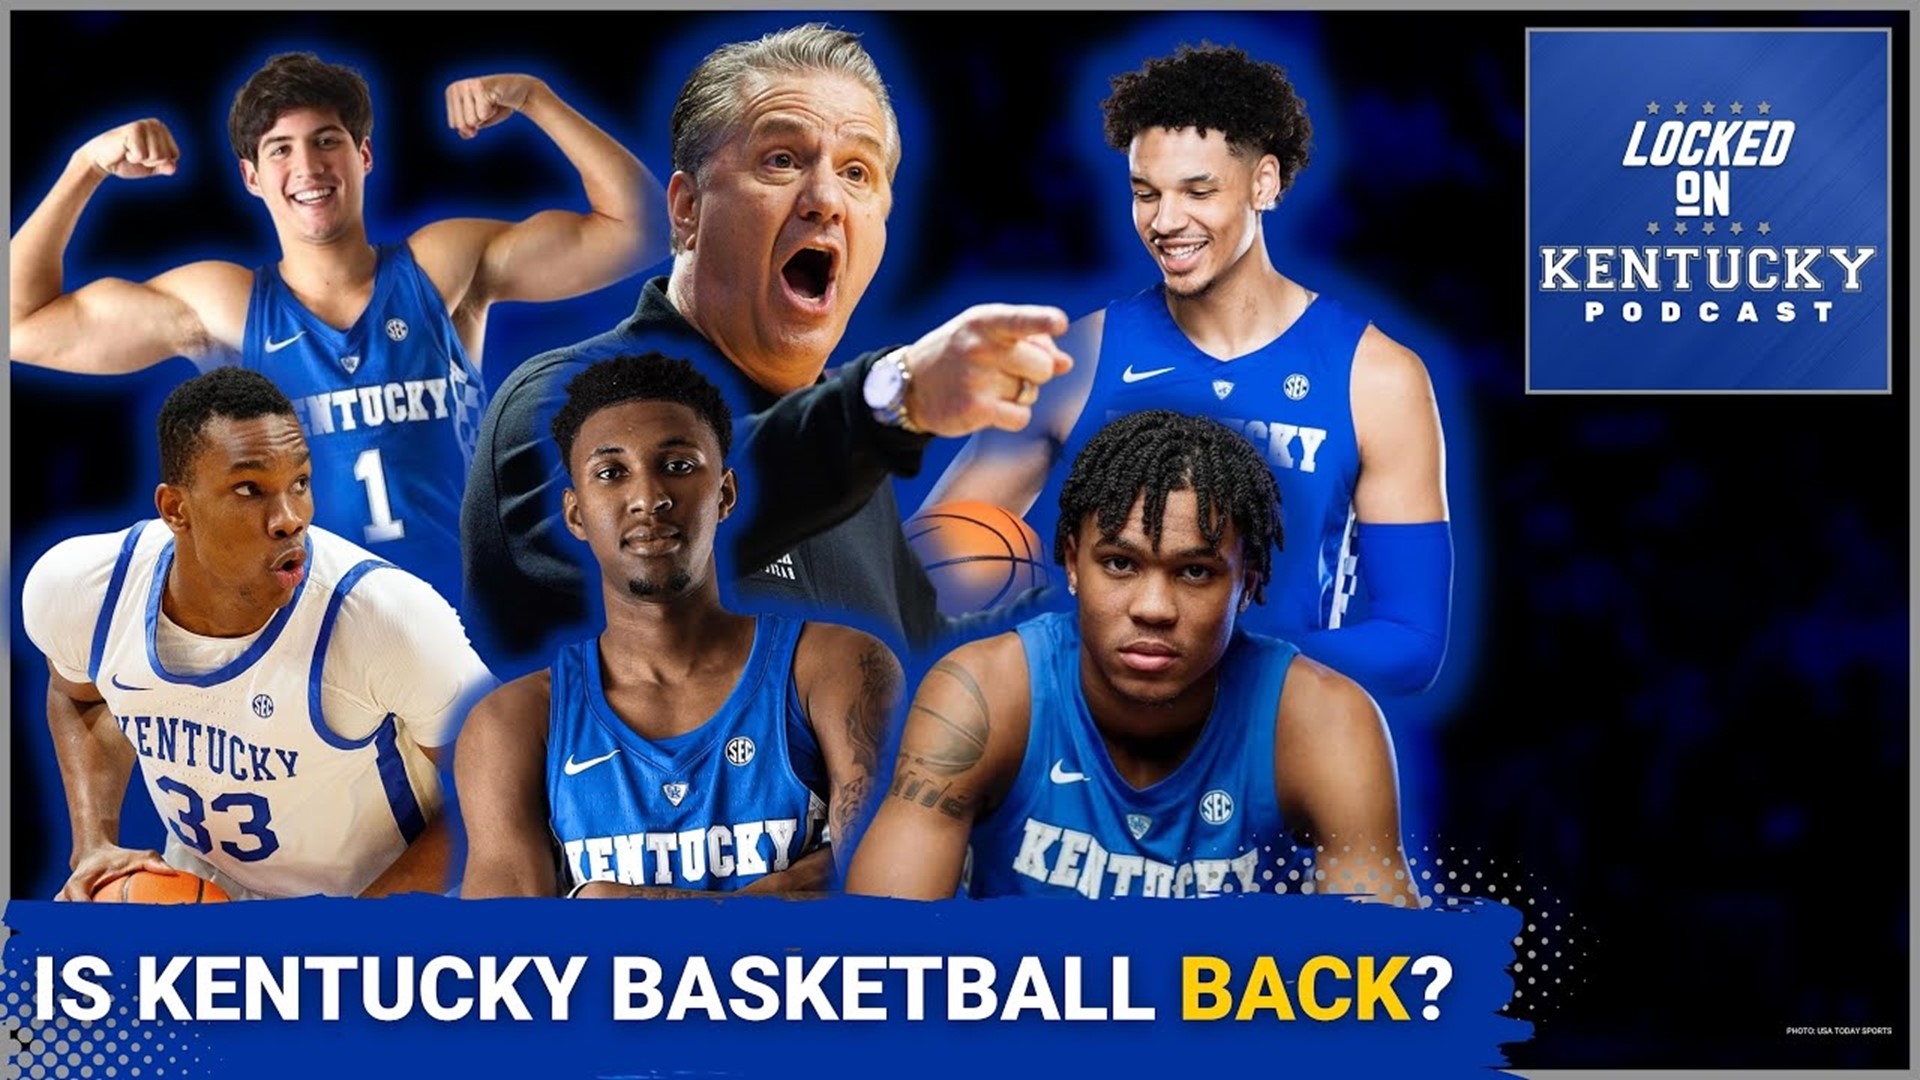 Kentucky basketball has made their way back inside ESPN's preseason top 25. Are the Wildcats back?